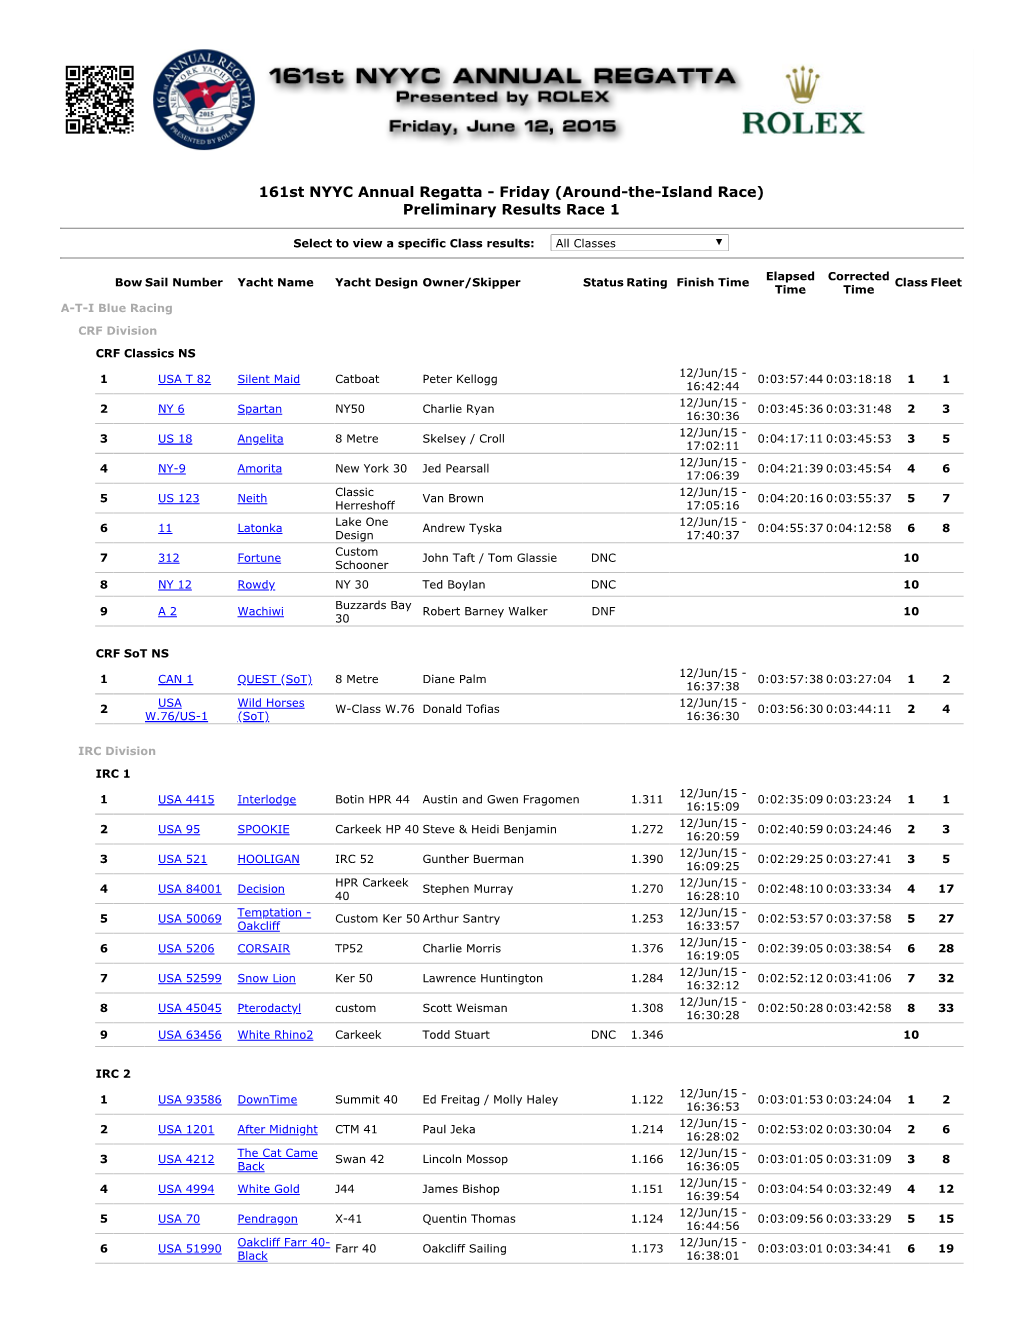 161St NYYC Annual Regatta - Friday (Around-The-Island Race) Preliminary Results Race 1